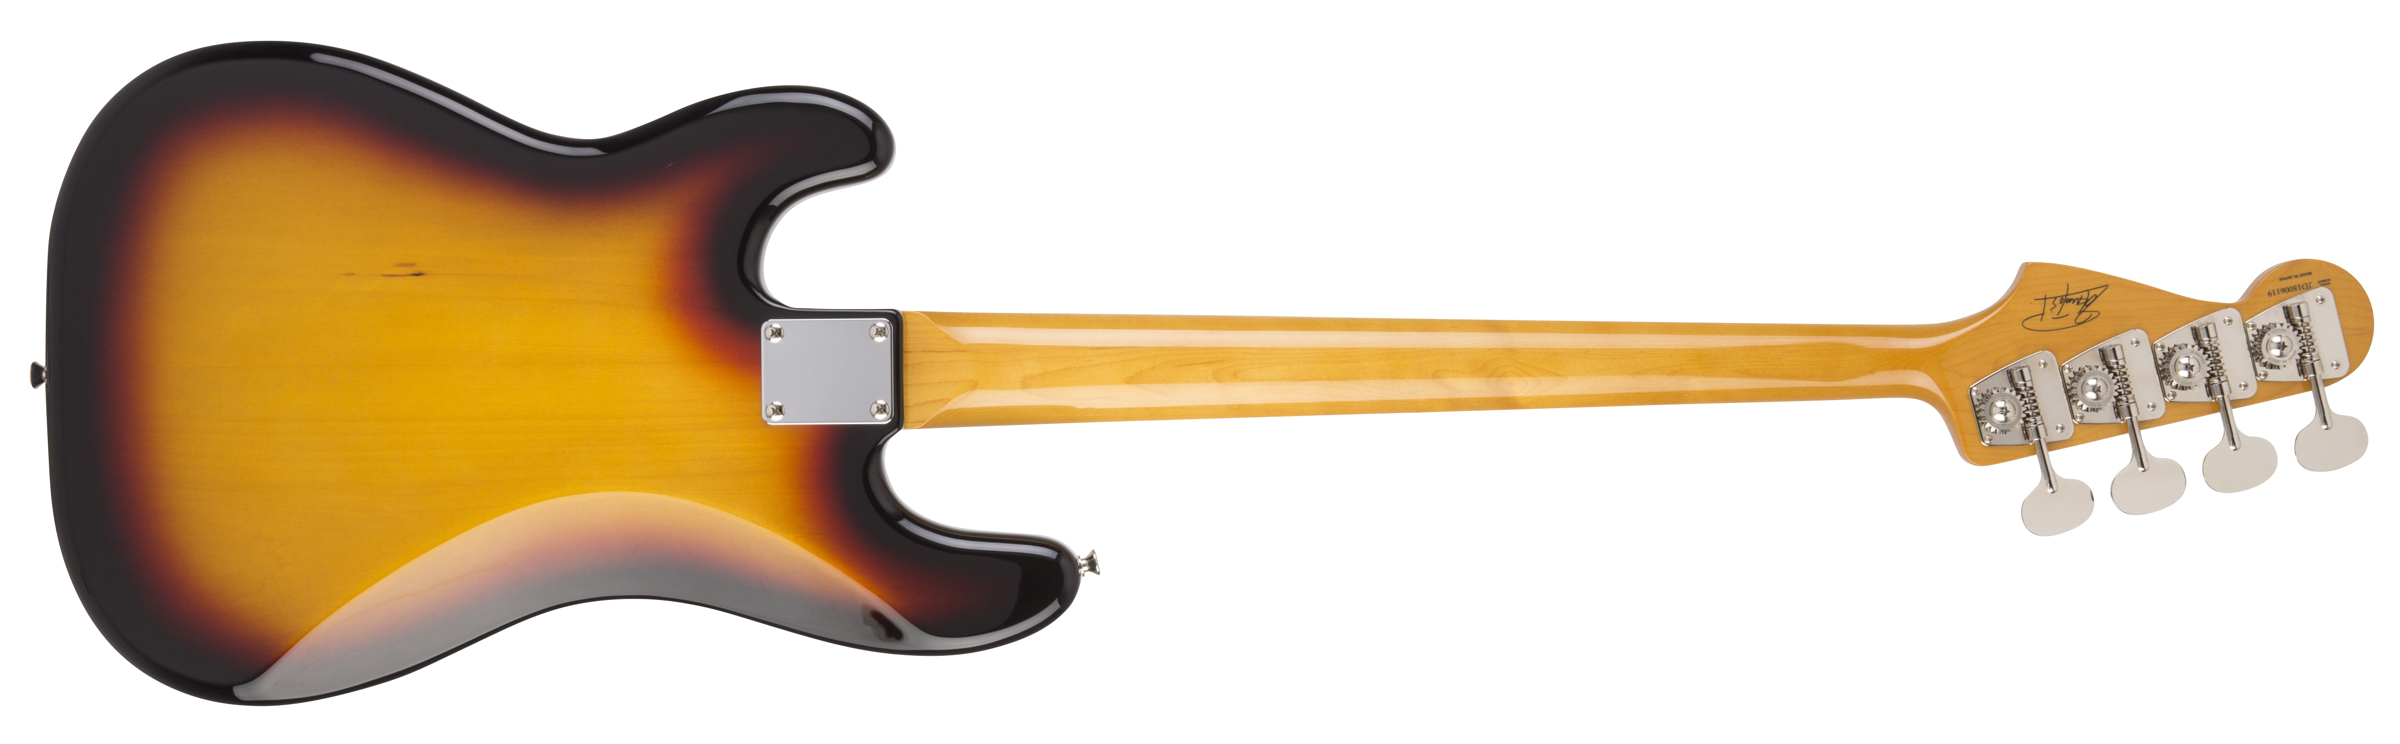 Hama Okamoto Precision Bass 3-Color Sunburst背面画像